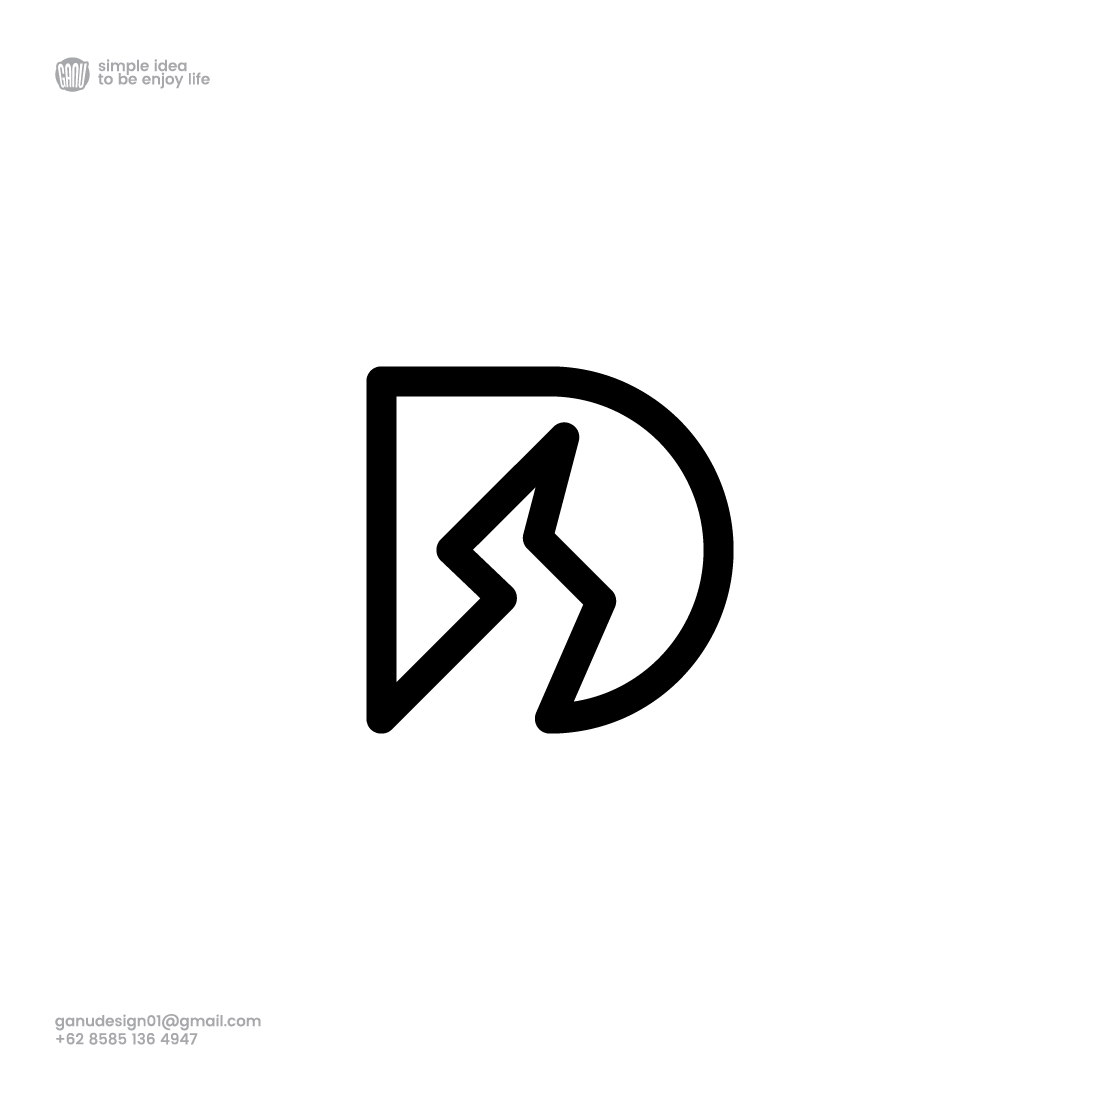 Letter D logo electric energy illustration Design preview image.